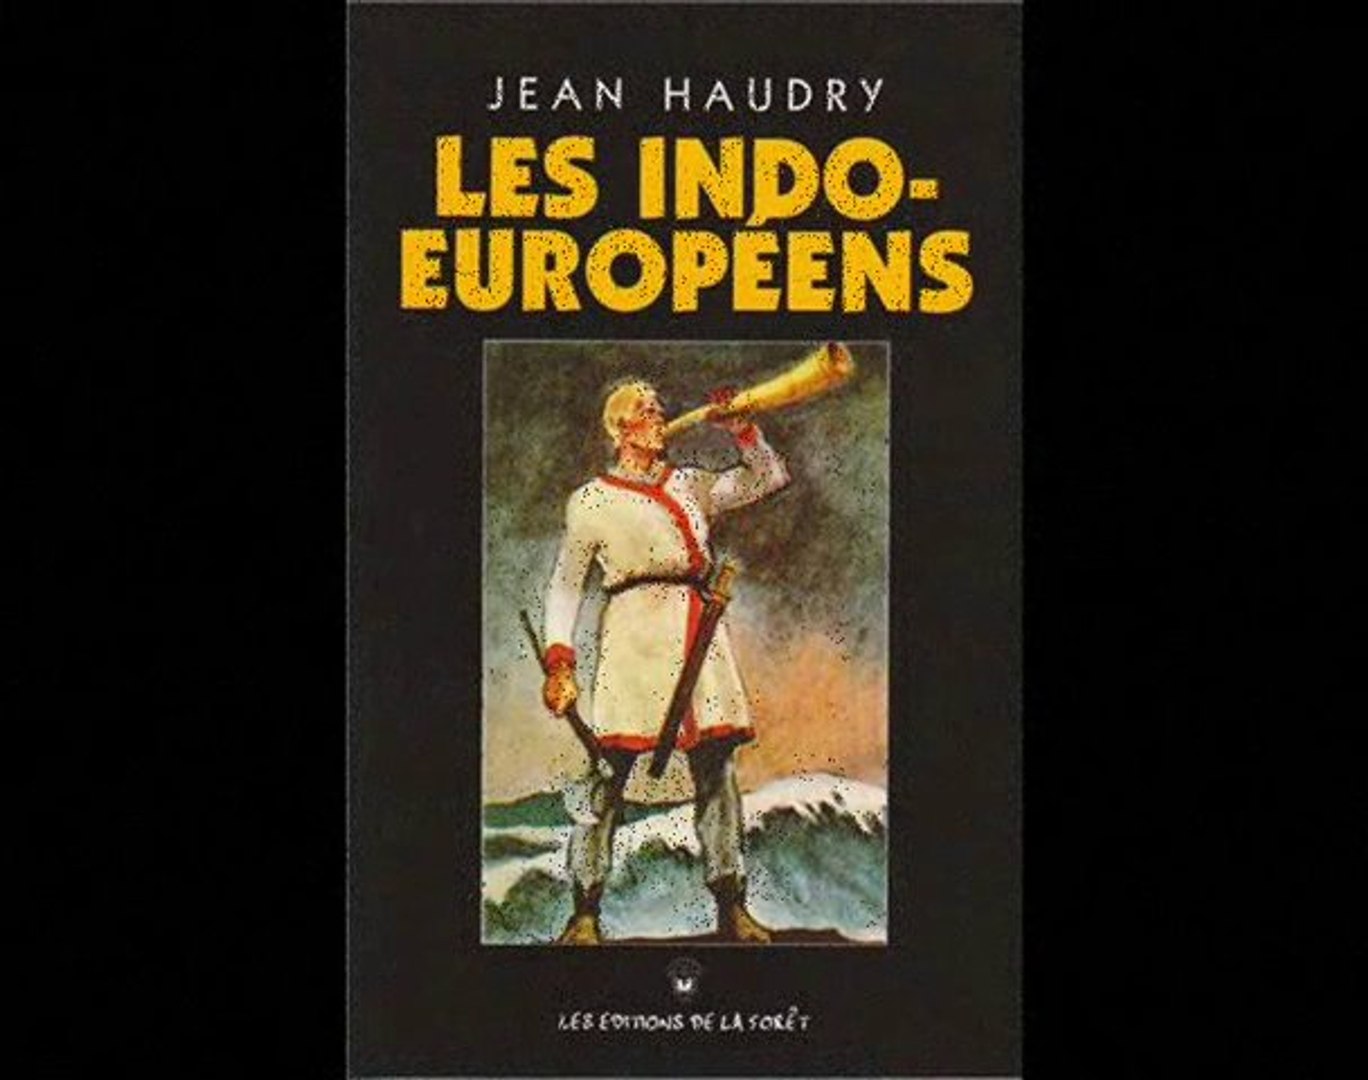 Les Indo-Européens de Jean Haudry - Vidéo Dailymotion